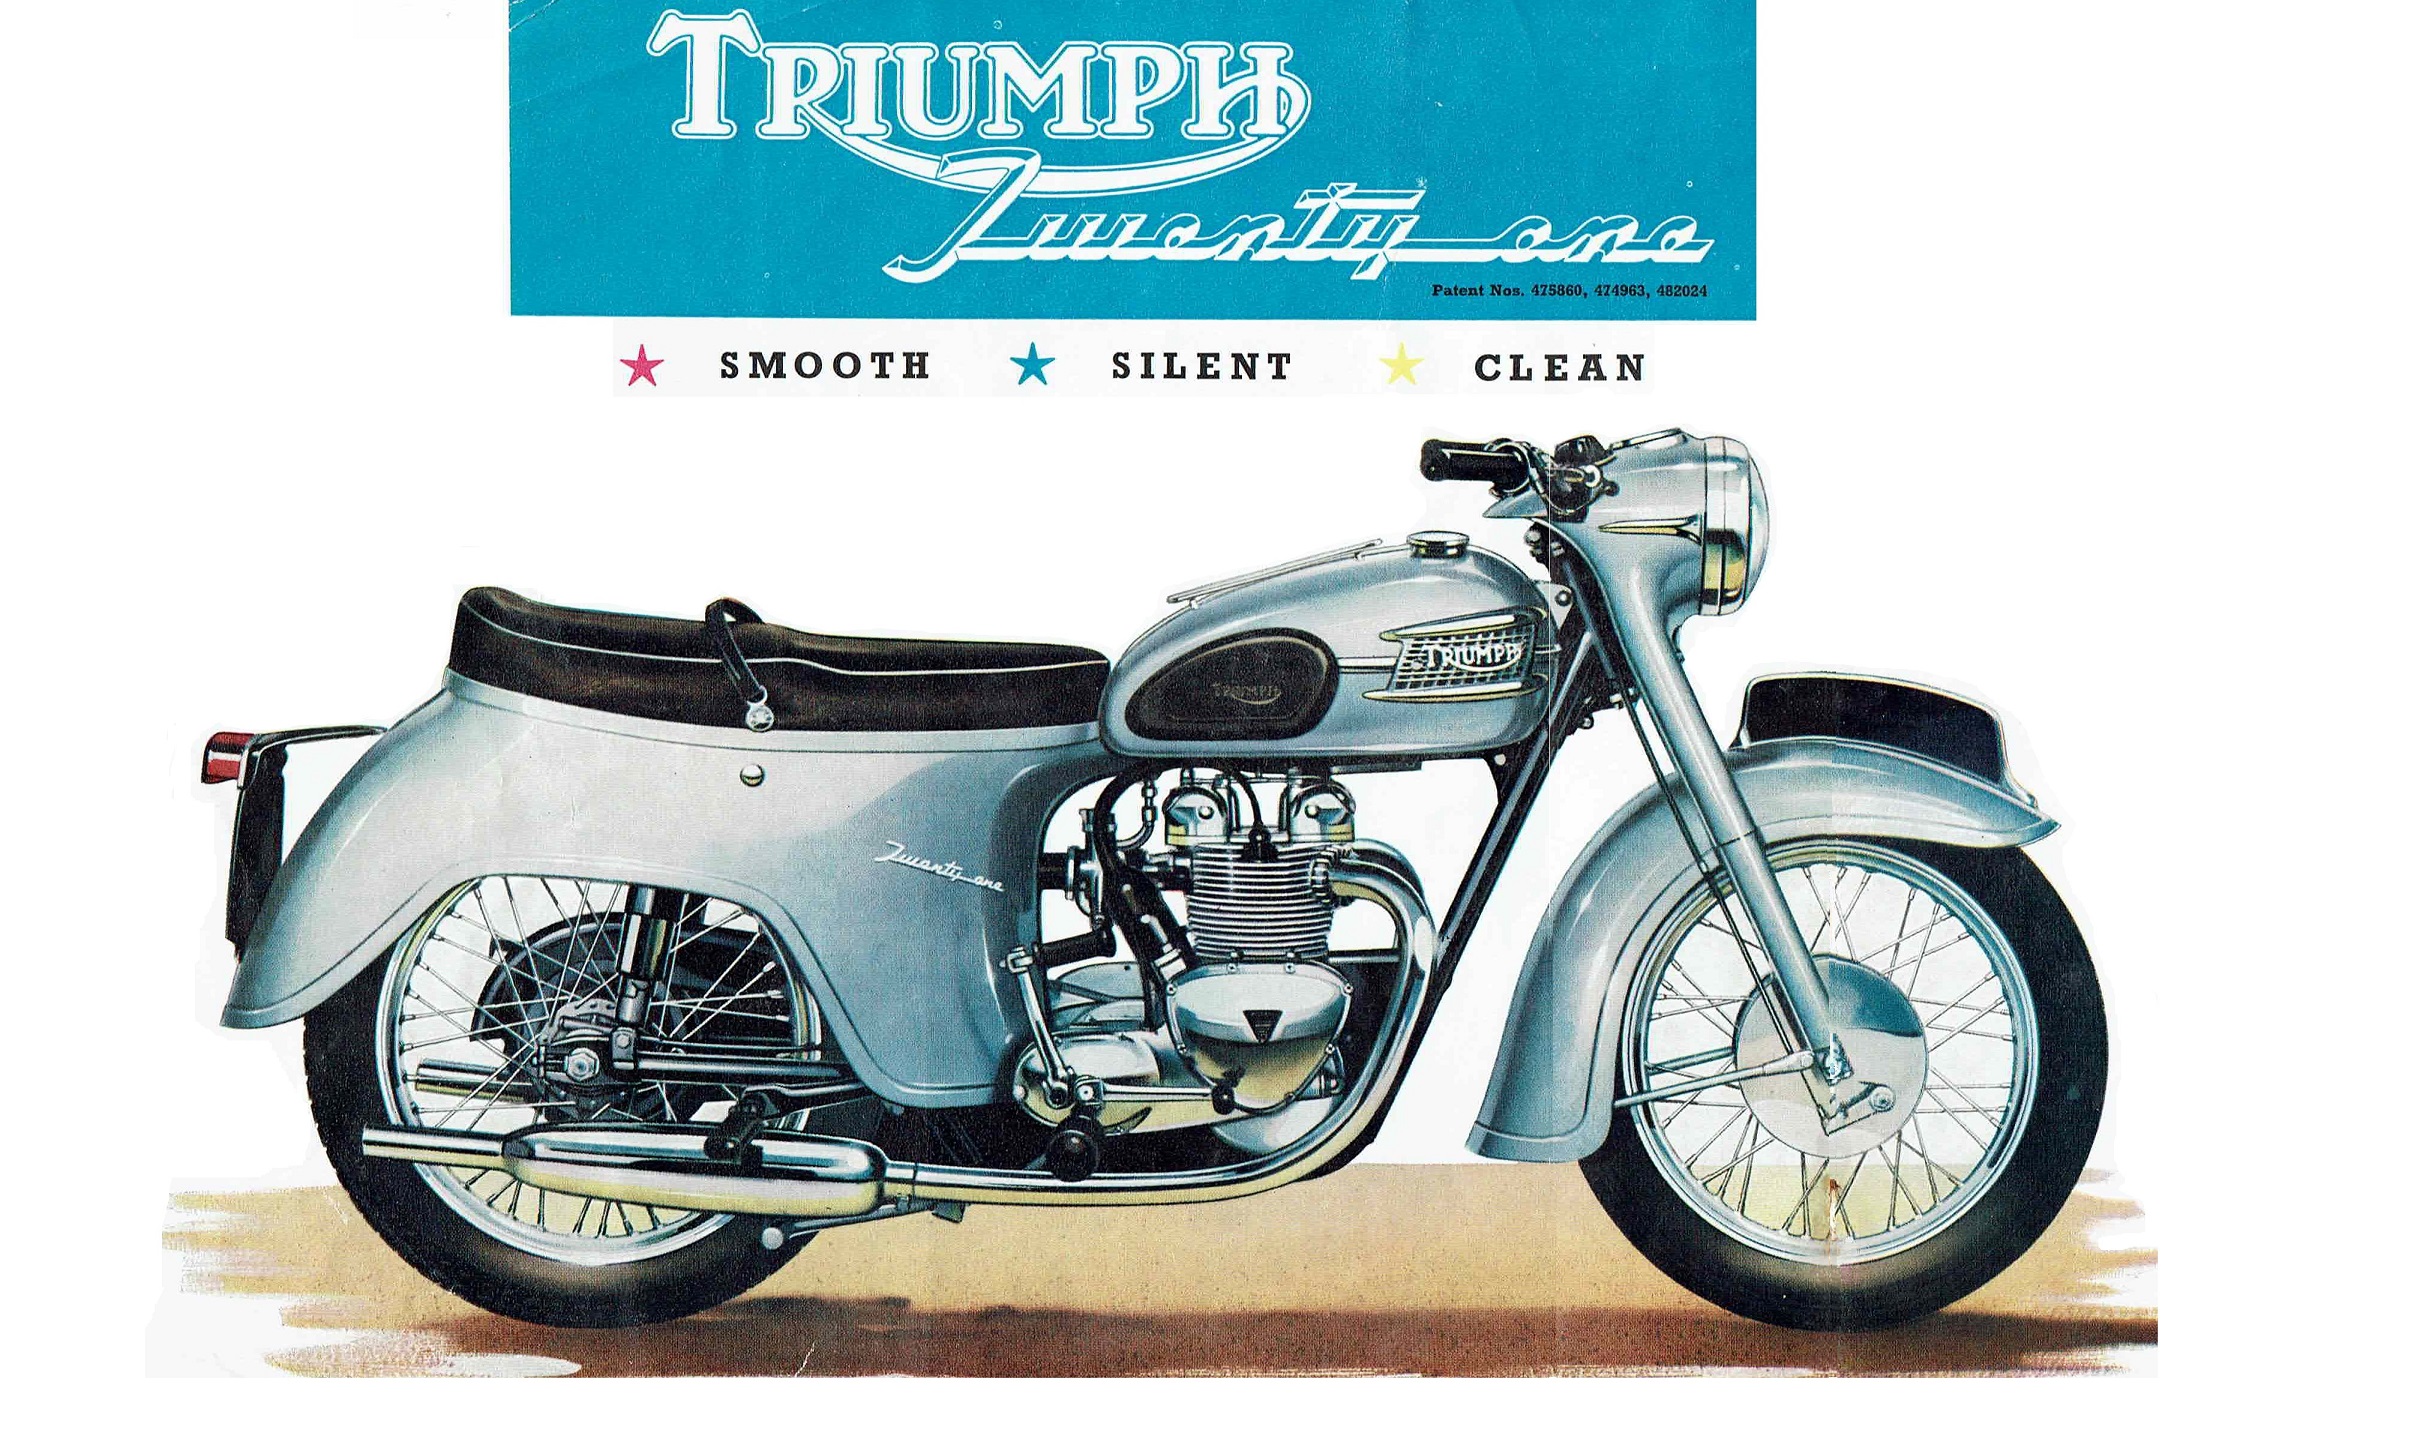 The Triumph C Range | Information on the 60's Meriden Triumph 'C 